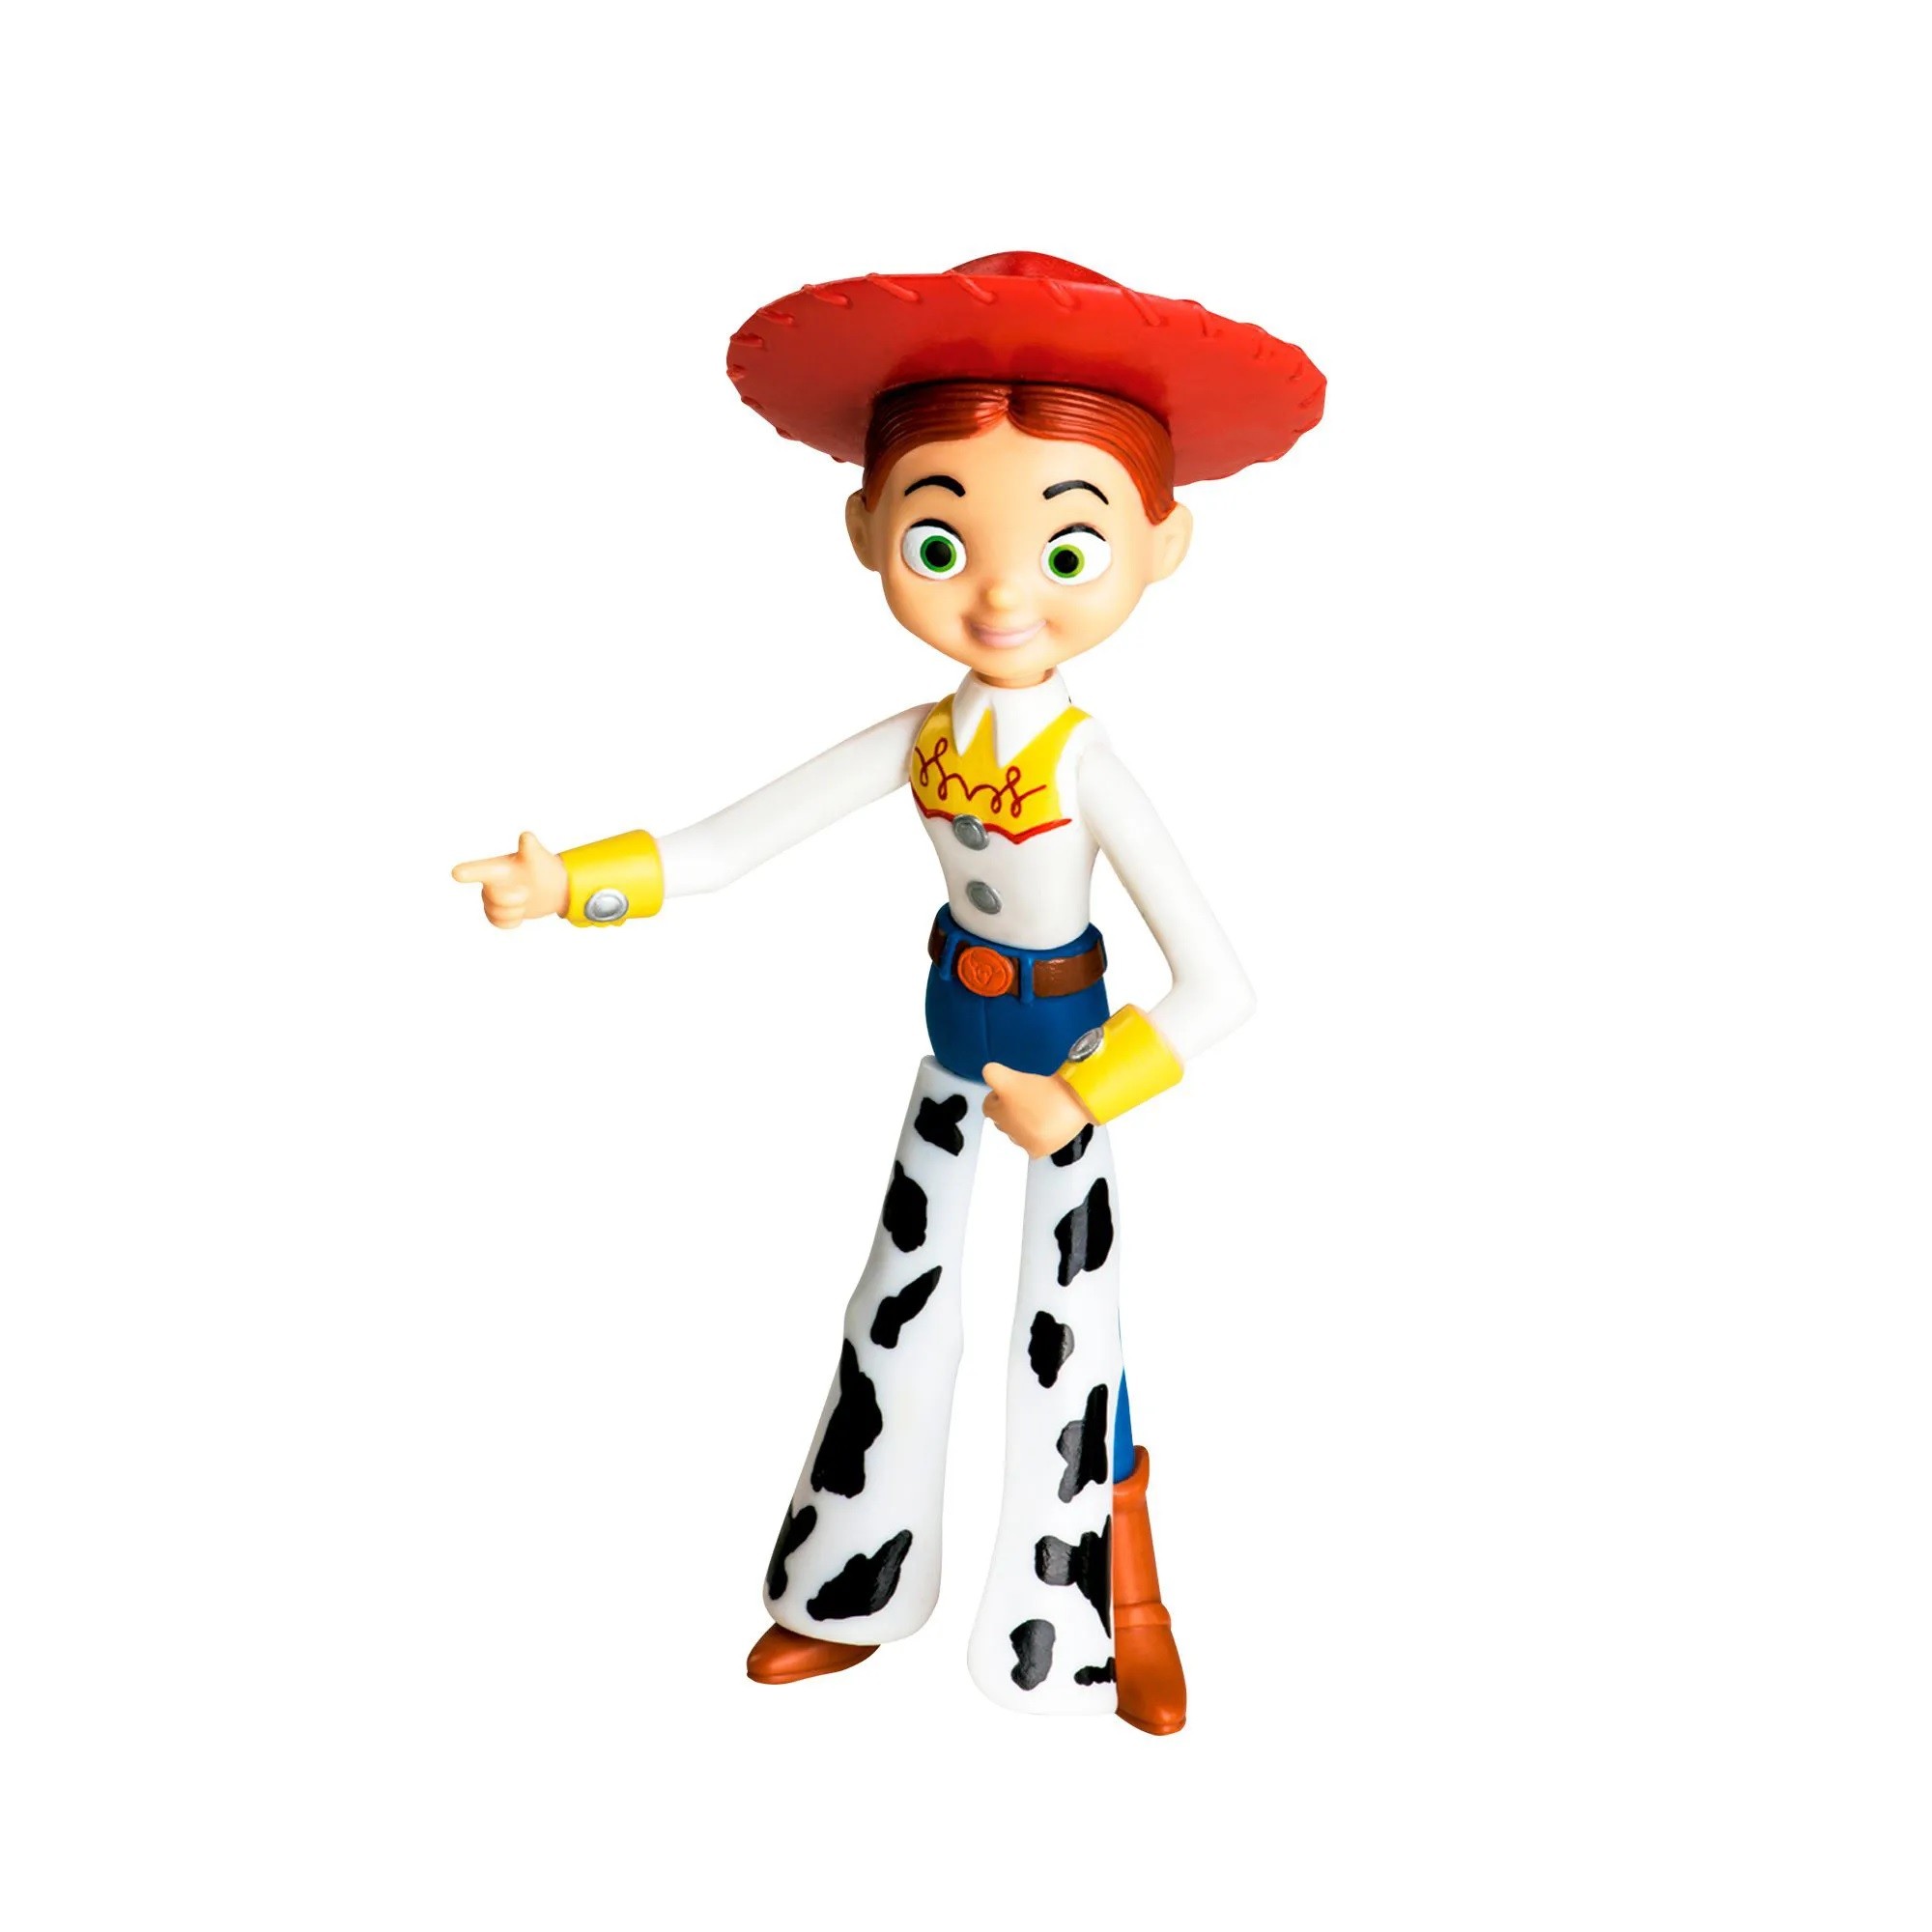 Boneco Vinil Toy Story Jessie - Líder Brinquedos Pixar